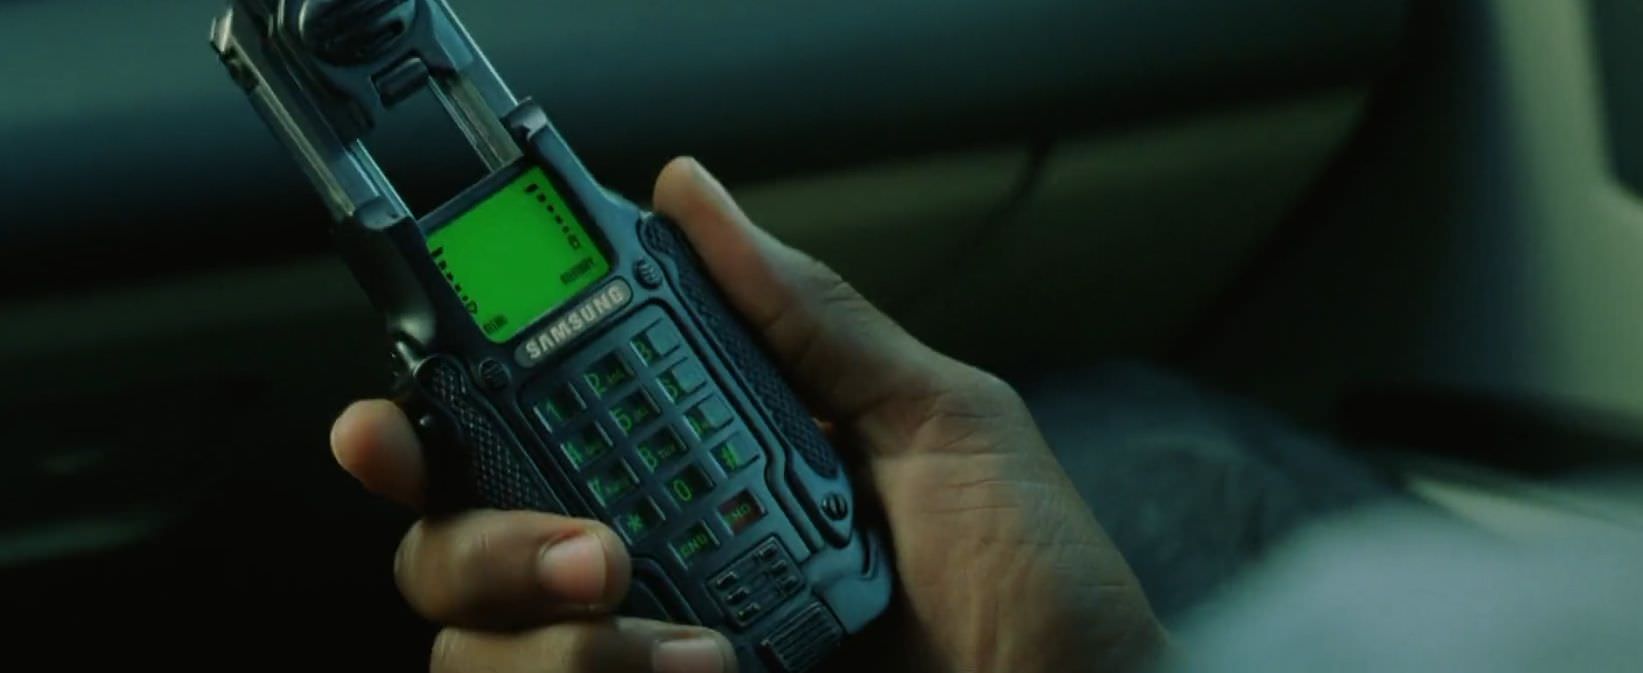 Матрица телефона samsung. Samsung SPH-n270 Matrix Phone. Nokia 8110 Нео. Матрица Нео нокиа 8110. Телефон из матрицы Nokia 8110.